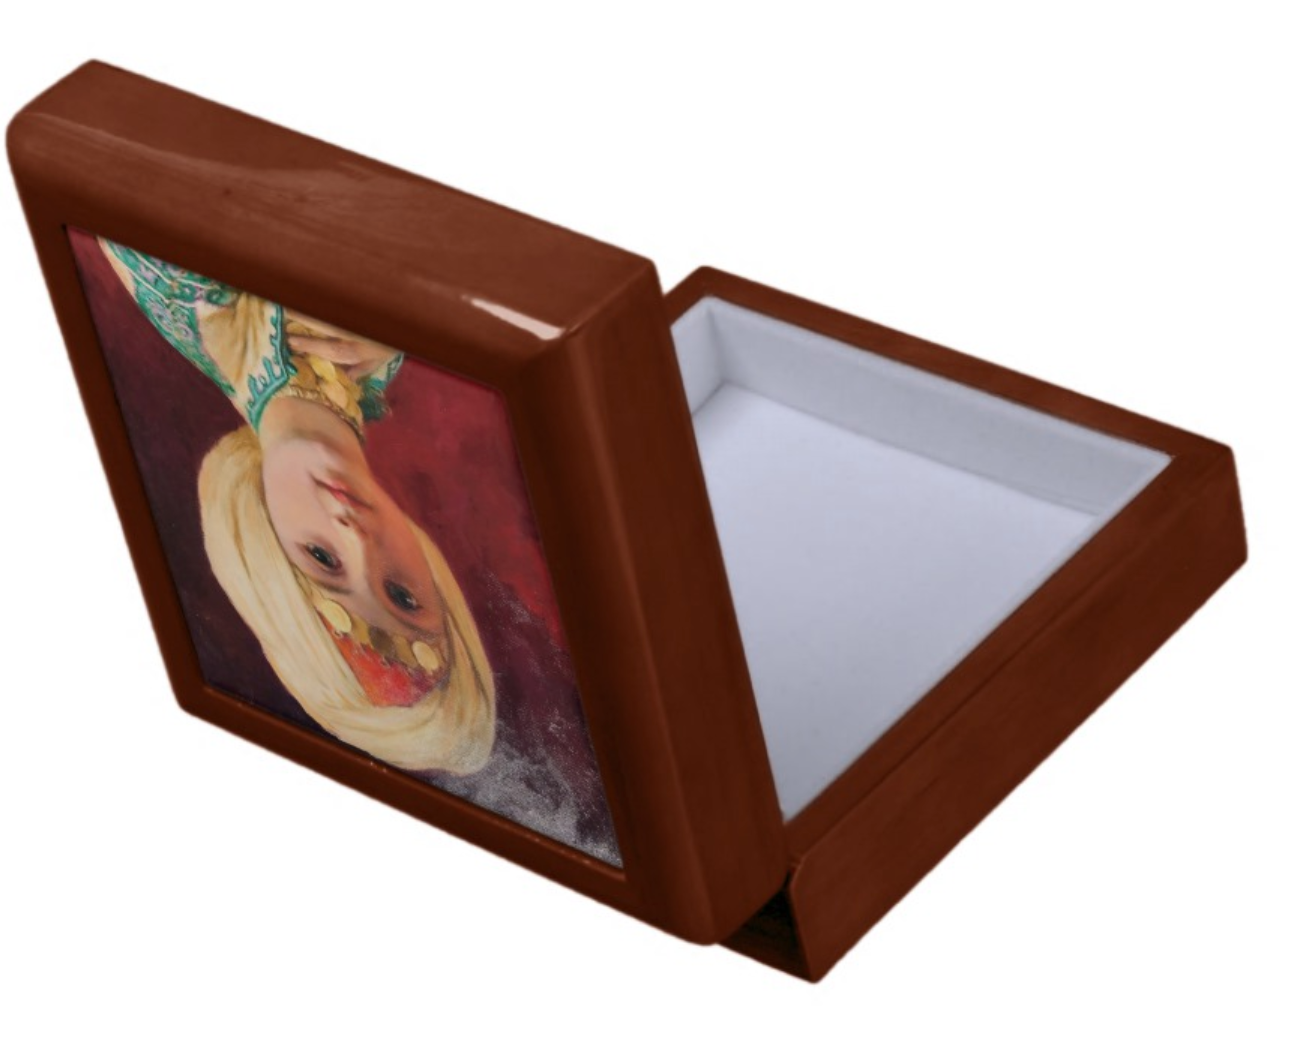 Keepsake/Jewelry Box - Carl Haag Child with Turban - Lacquer Box Golden Oak Felt Lined